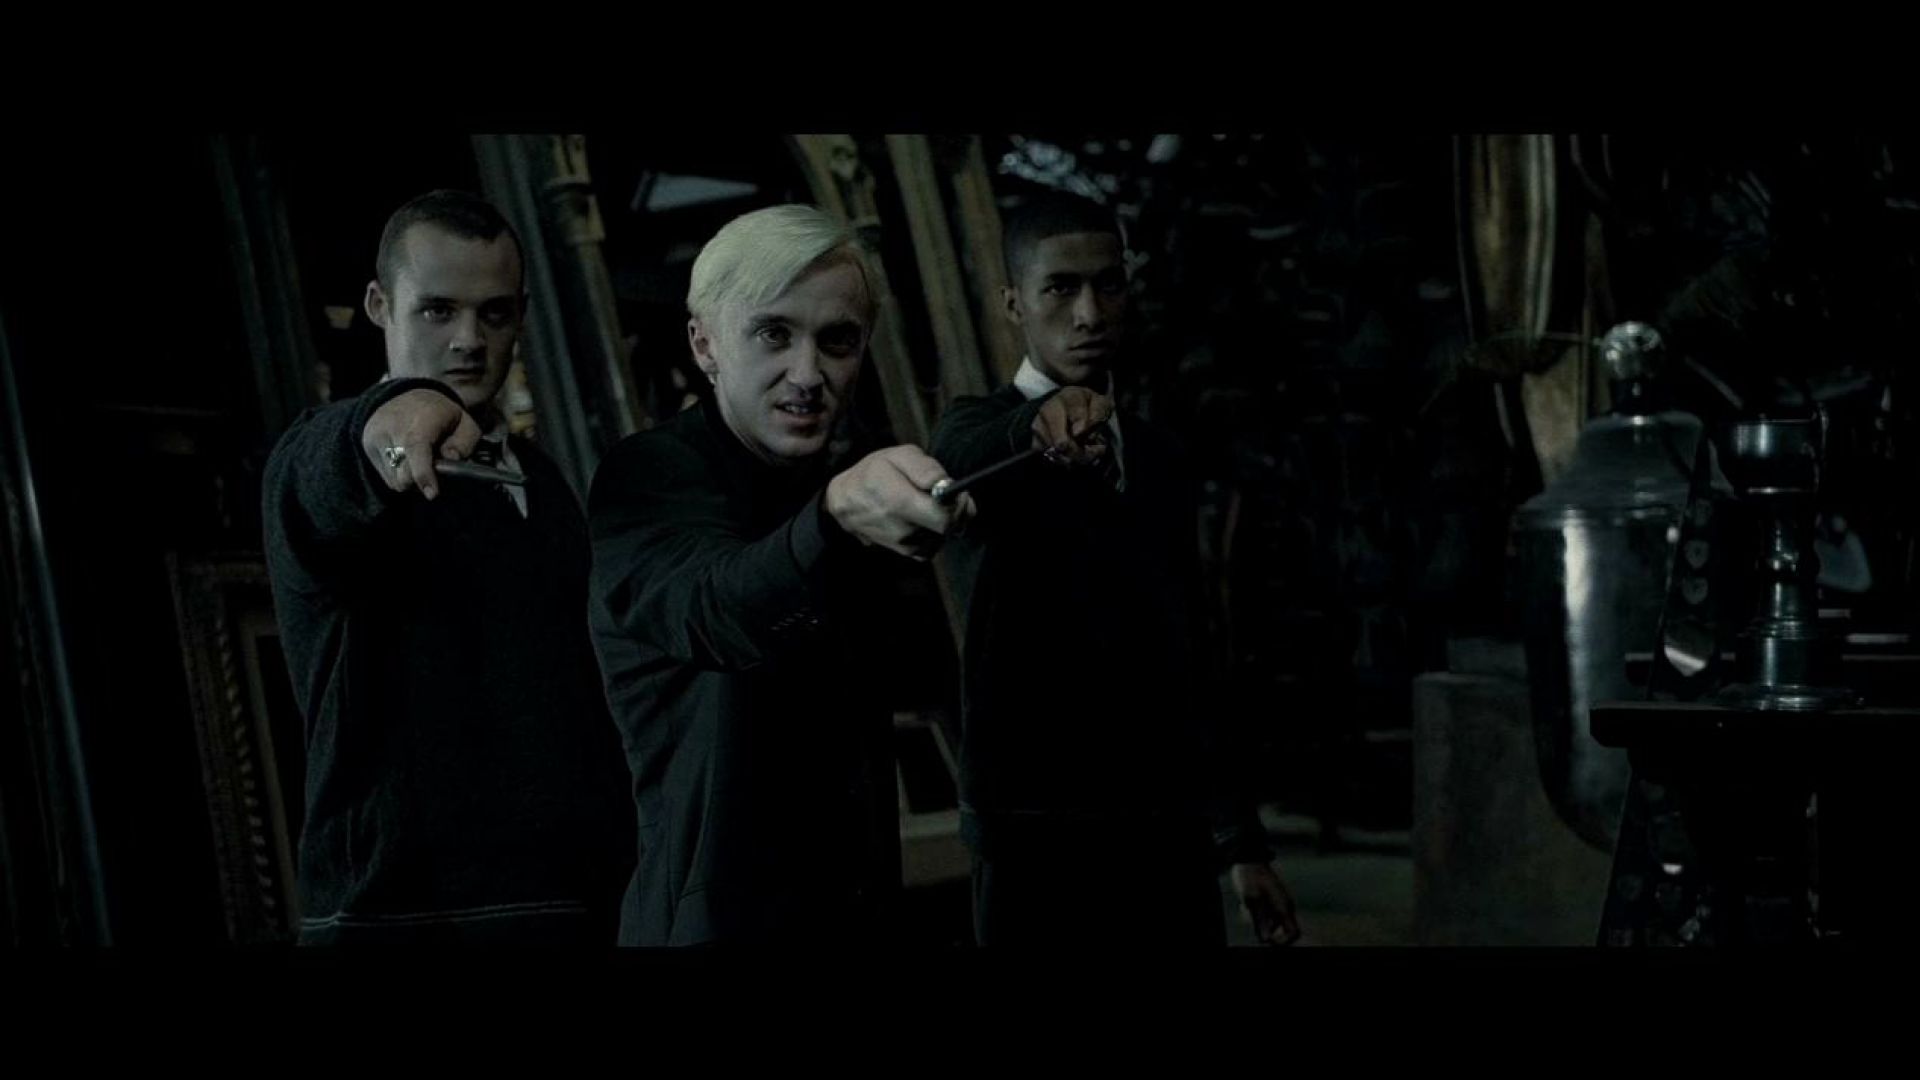 Draco Malfoy vs Harry Potter, the final confrontation